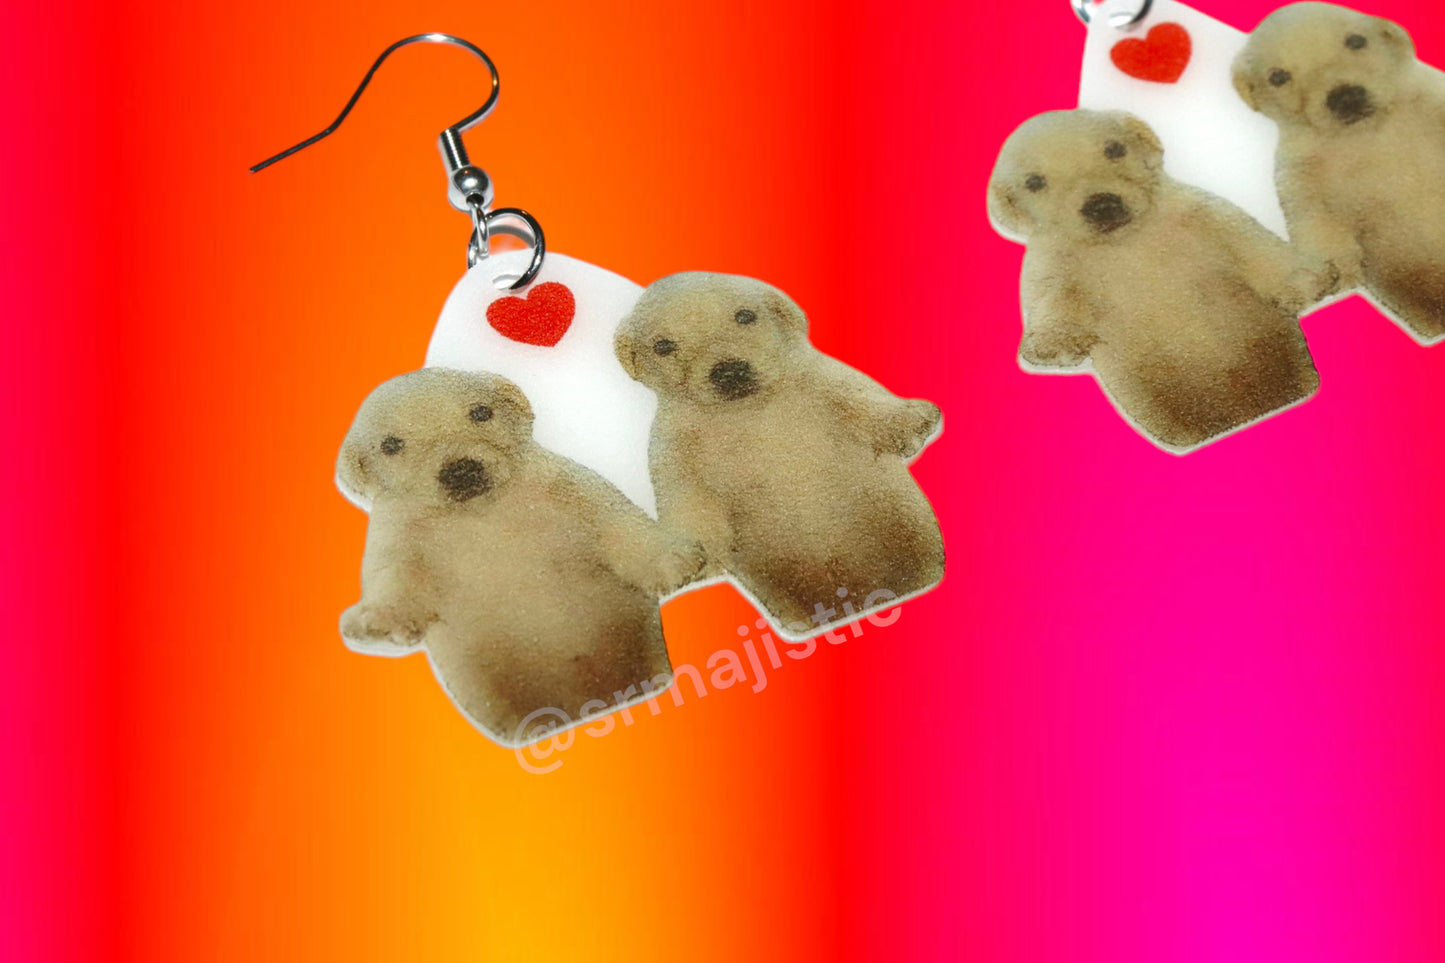 Jotchua Dogs in Love Meme Funny Handmade Earrings!